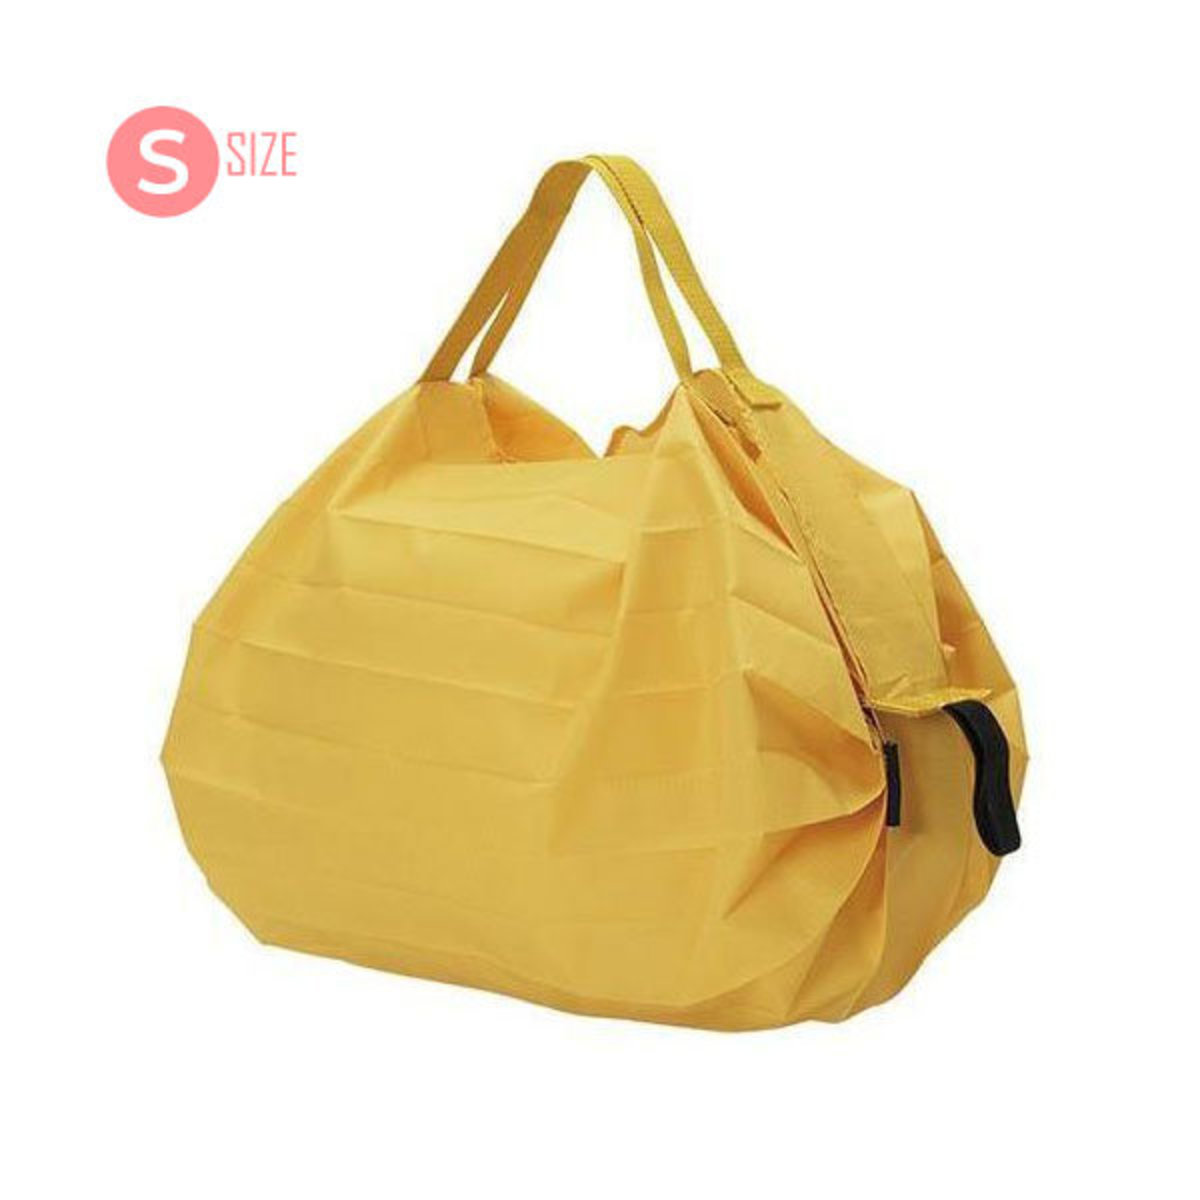 【S466K】KARASHI - Easy Foldable Compact Bag - Size S (4976404446637)